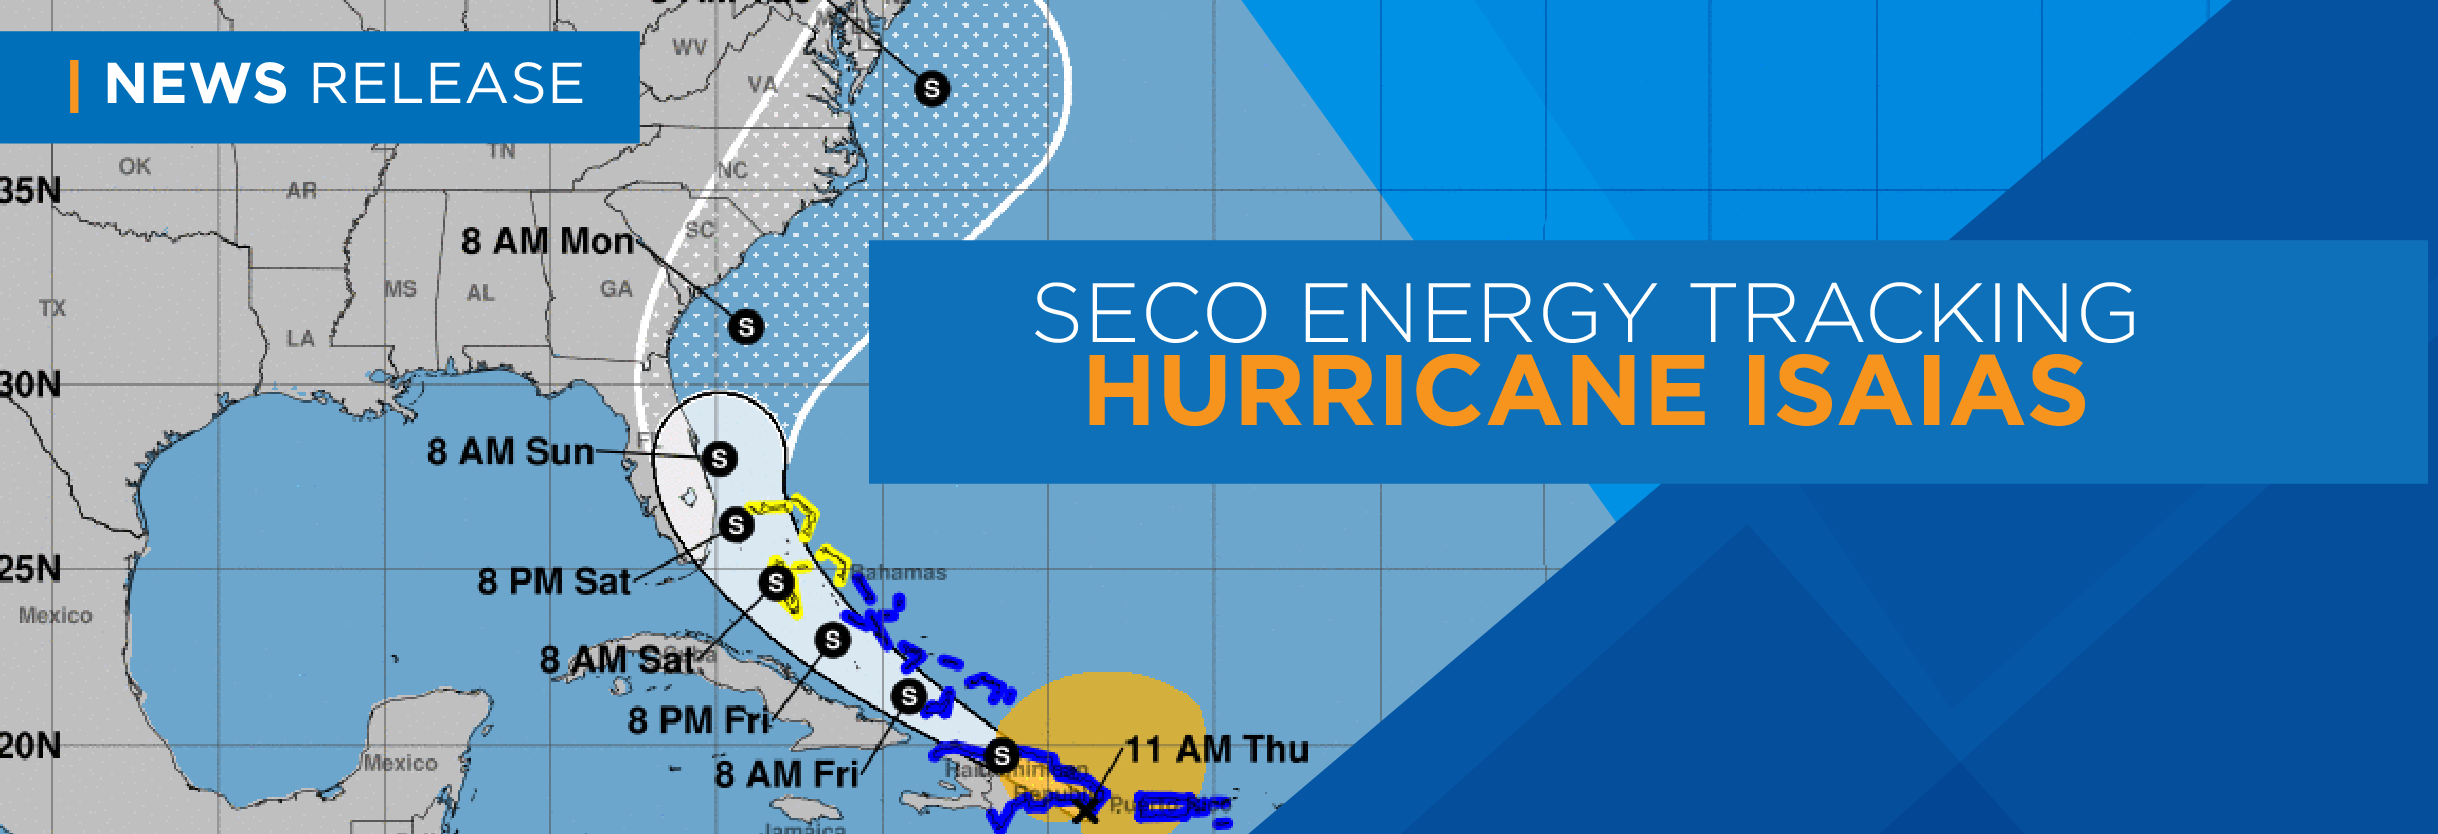 SECO Energy Tracking Hurricane Isaias